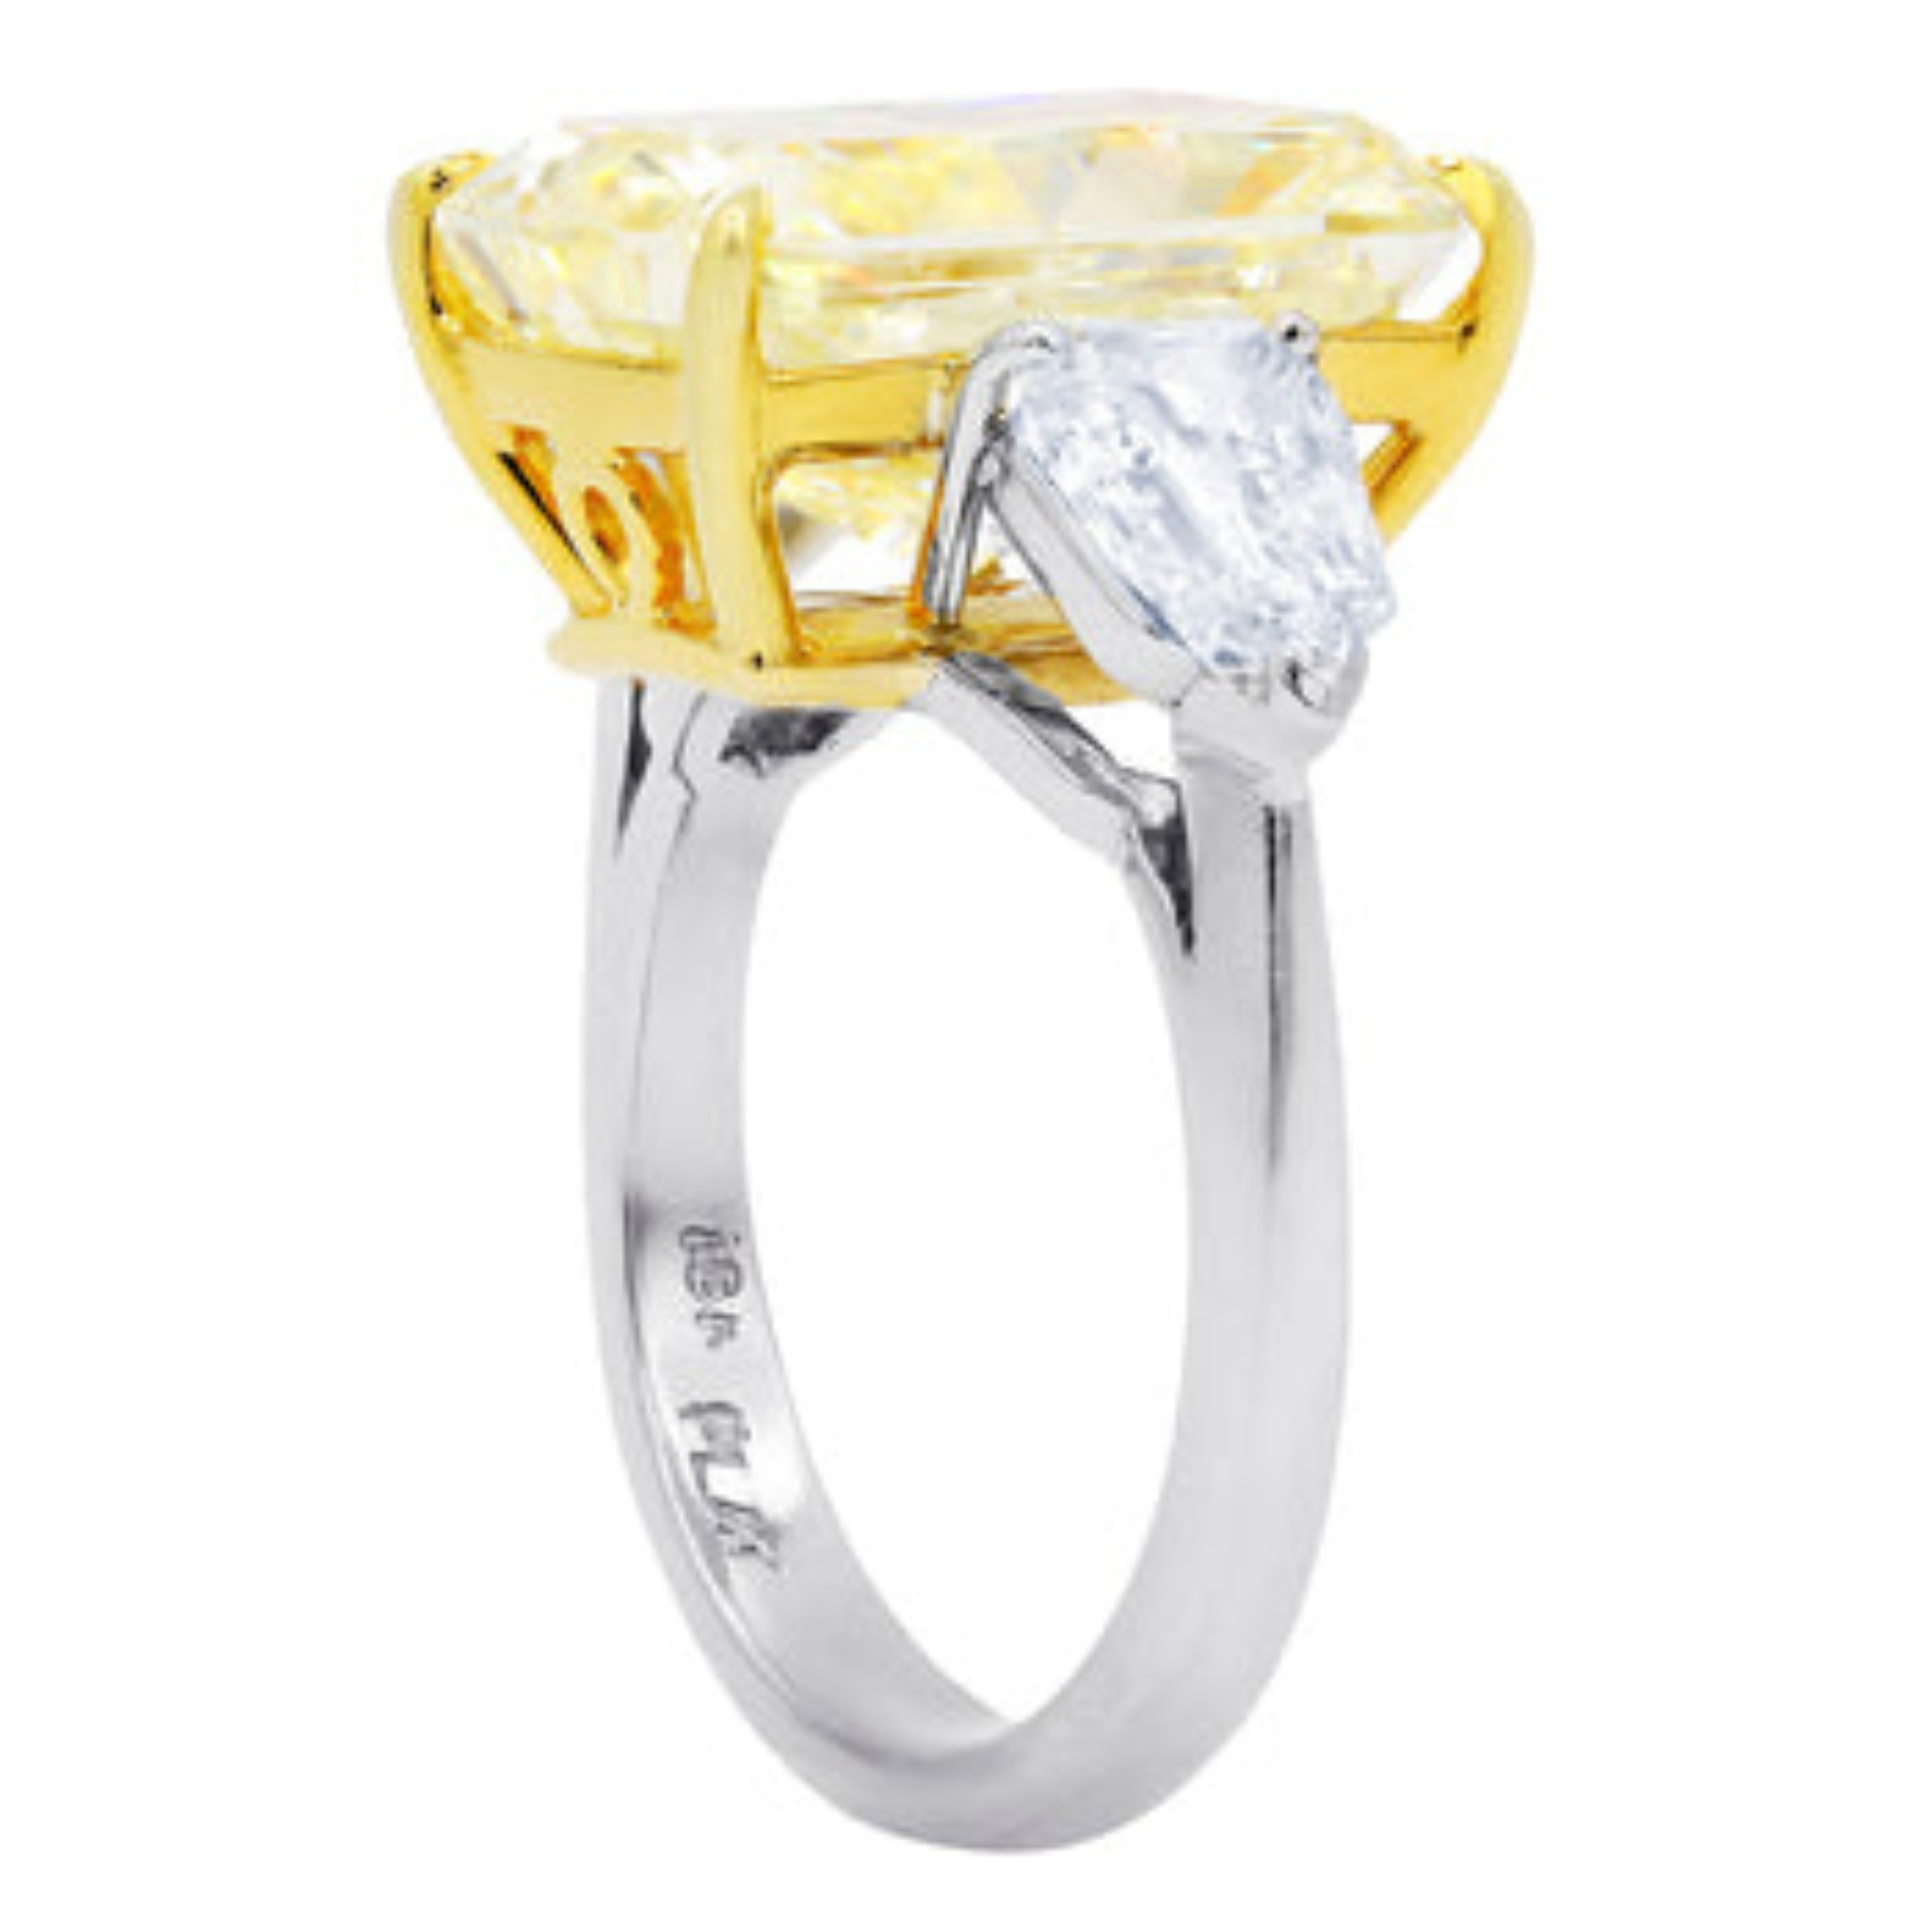 10.15ct Fancy Yellow Radiant Diamond Ring.jpg